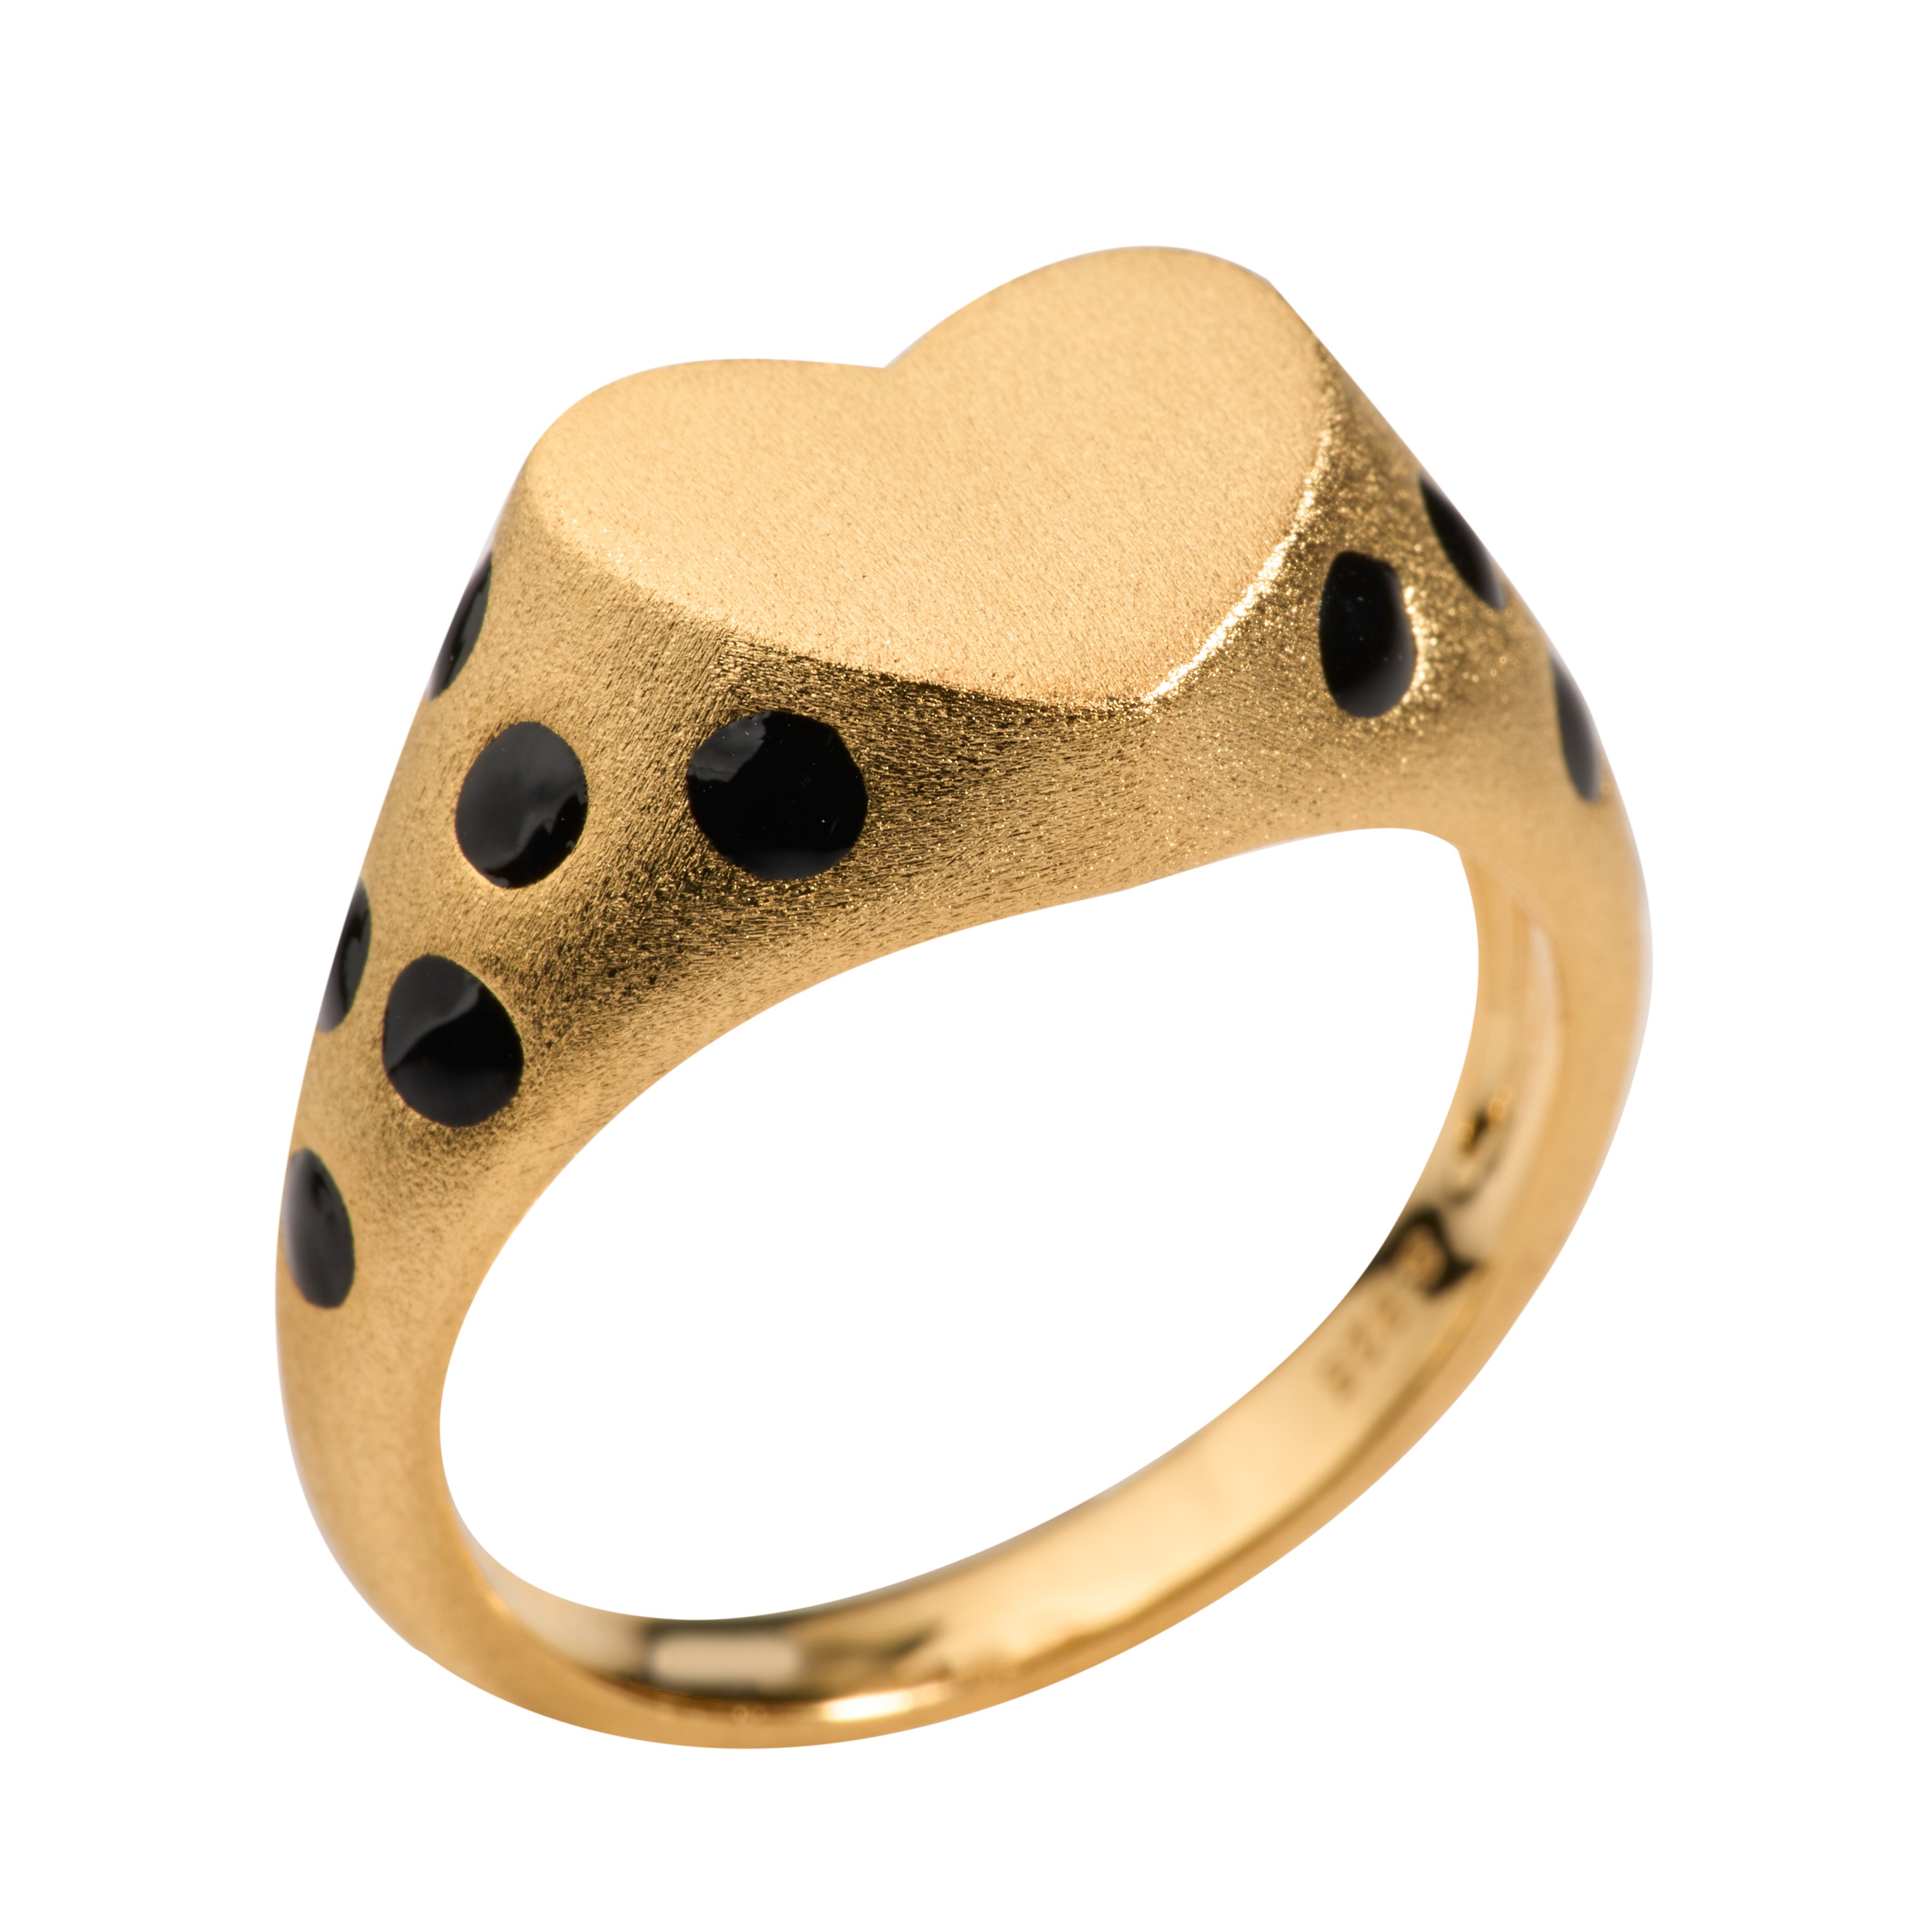 AMMANII Heart-Shaped Signet Ring with Polkadot Enamel in Vermeil Gold